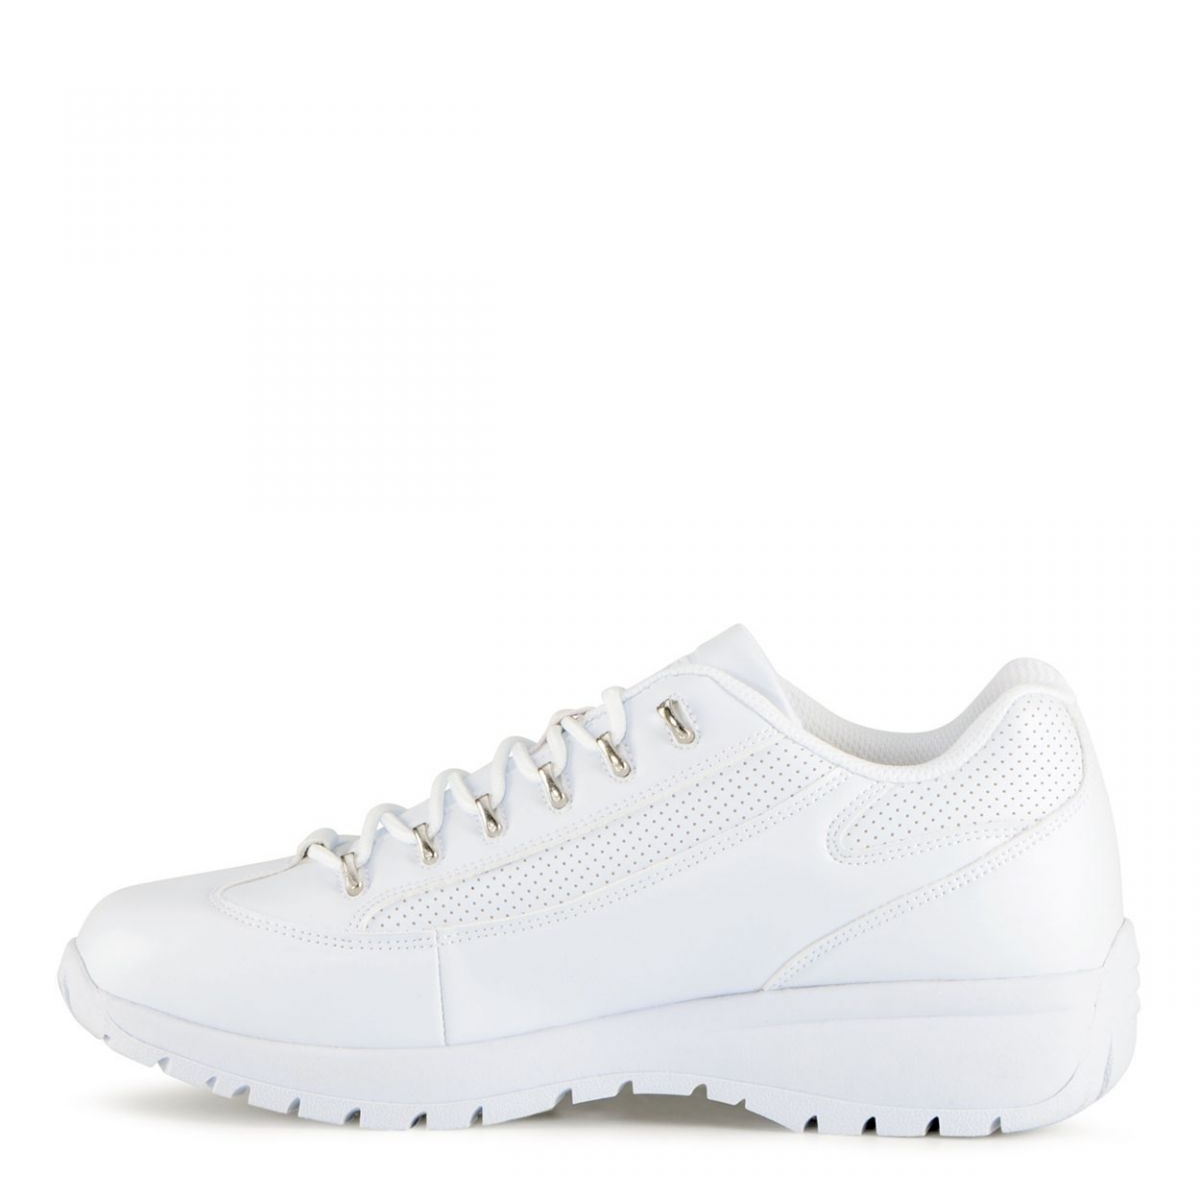 Lugz Men's Express Sneaker White - MEXPRSPV-100 WHITE - WHITE, 10